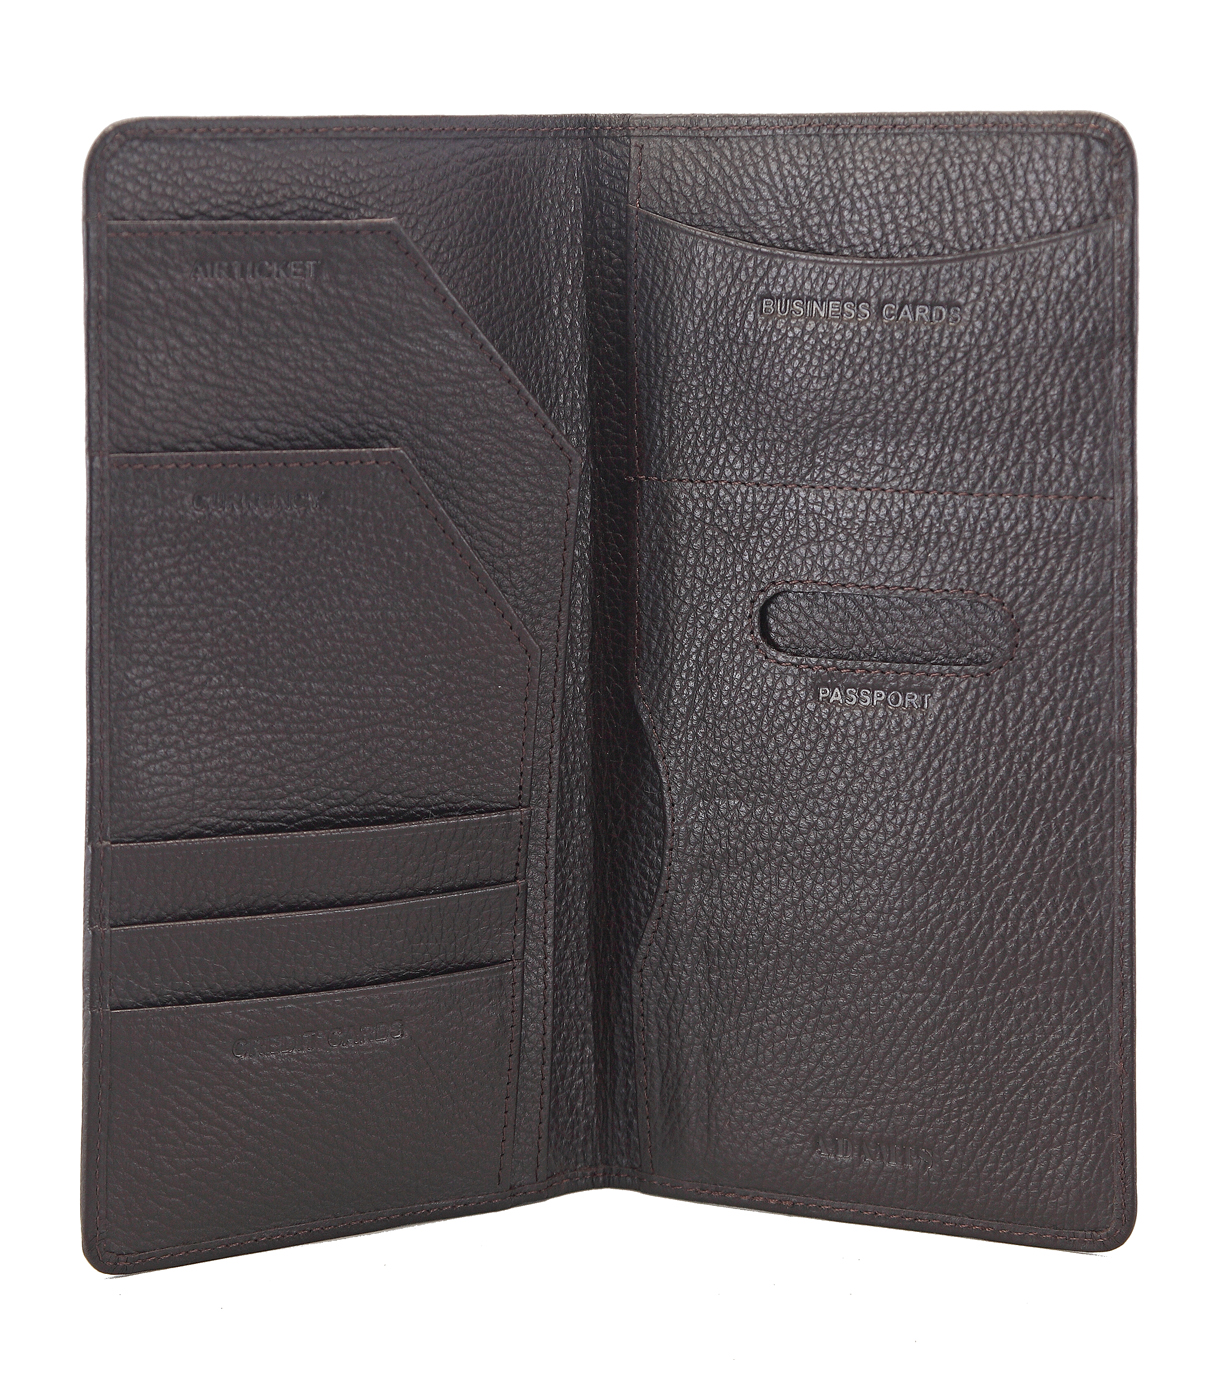 Wallet-Rafel-Travel document wallet in Genuine Leather - Brown